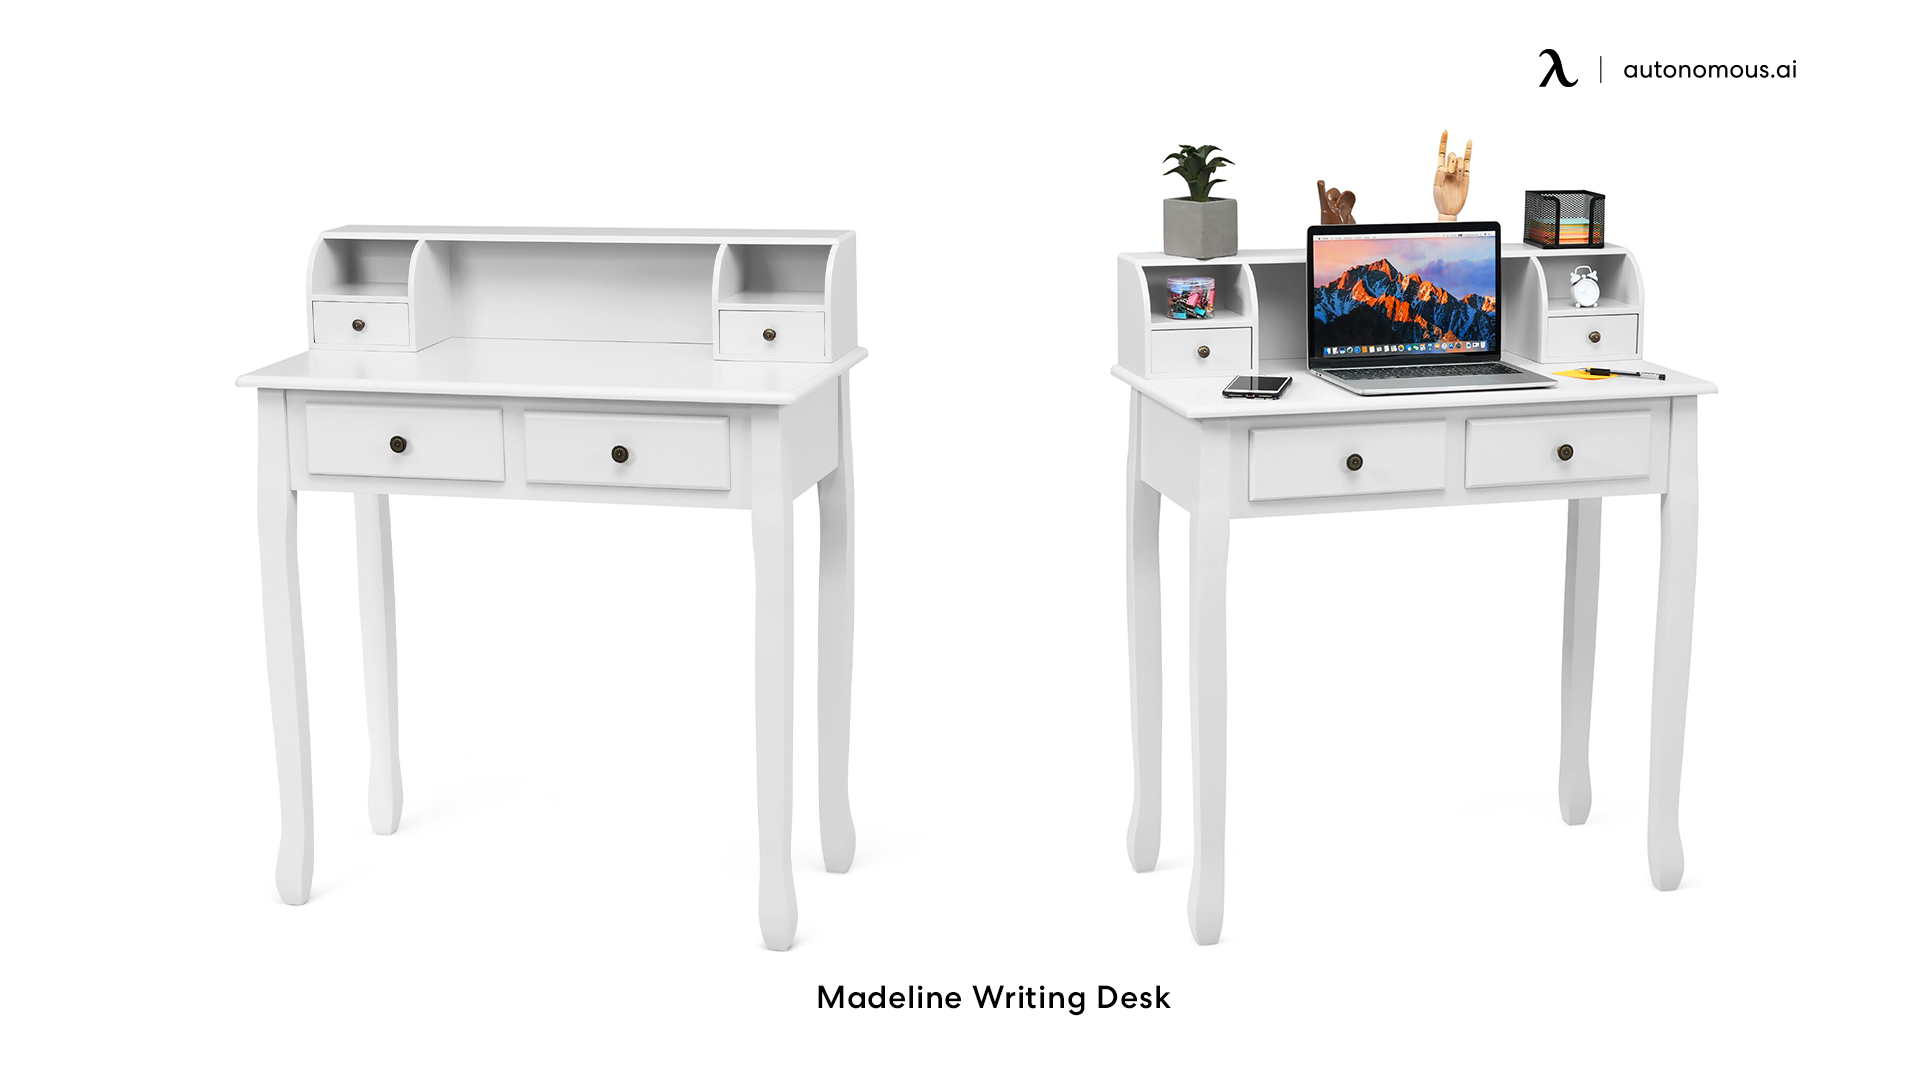 Madeline Writing Desk